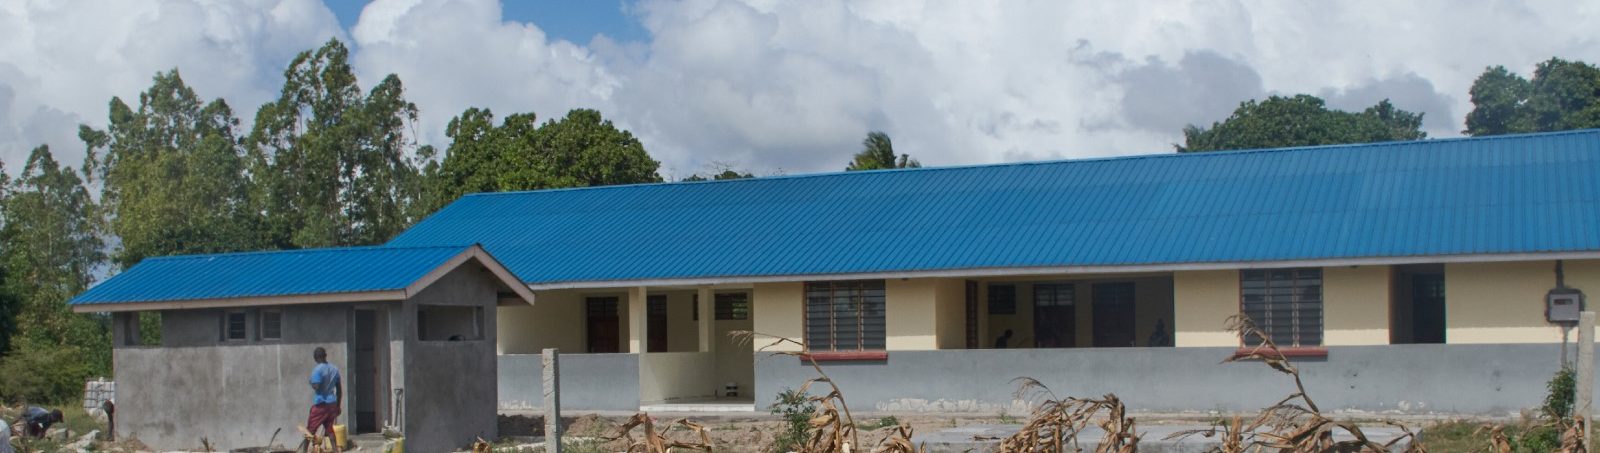 Newly built Mdzongoleni Primary School classrooms.